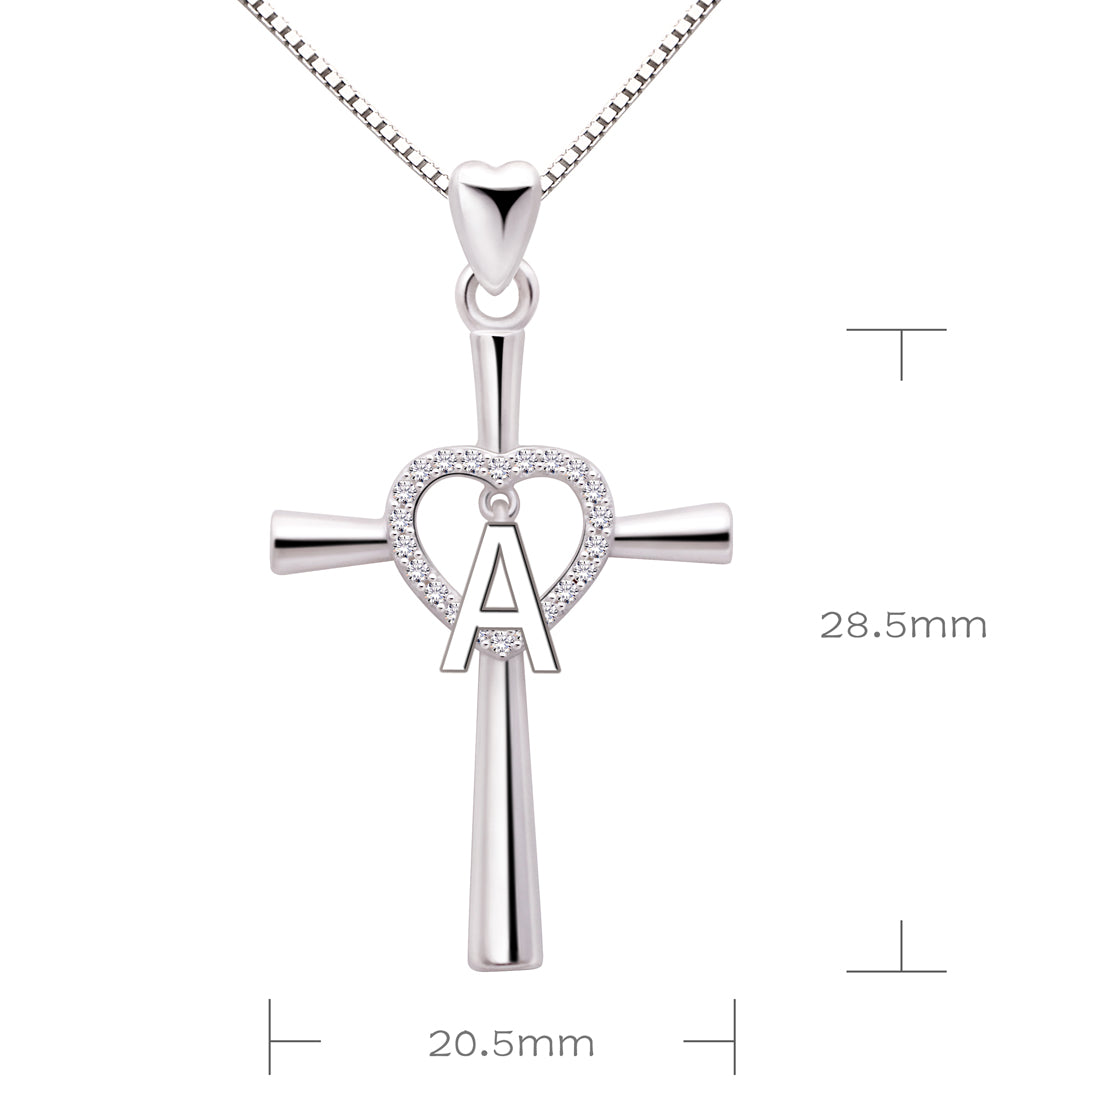 ALOV Jewelry Sterling Silver Initial Letter Alphabet Love Heart Cross Cubic Zirconia Pendant Necklace